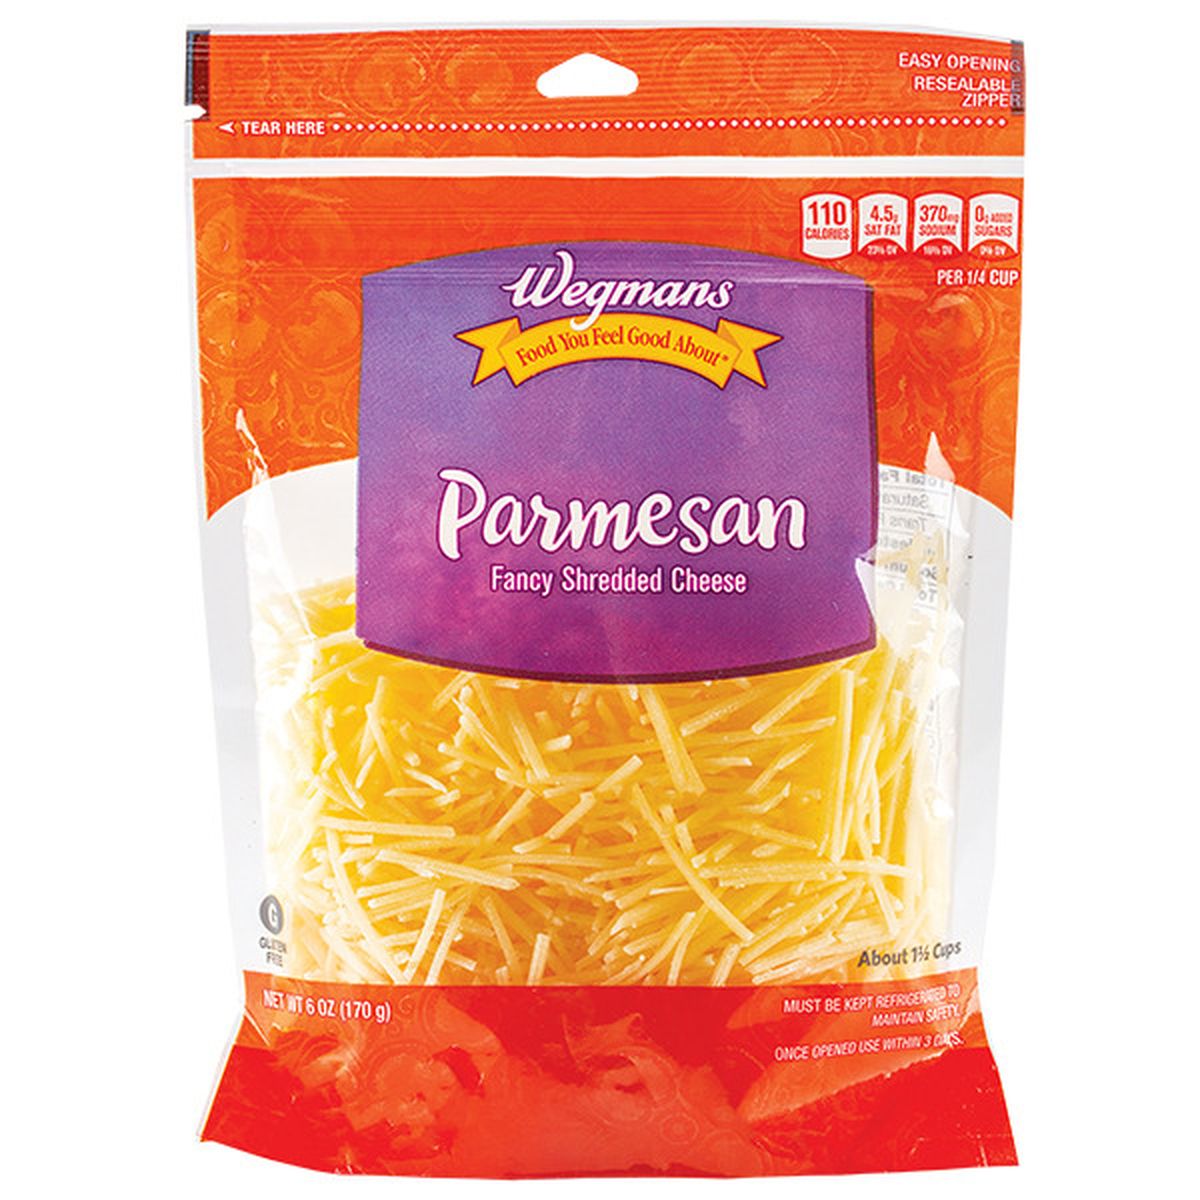 Calories in Wegmans Fancy Shredded Parmesan Cheese